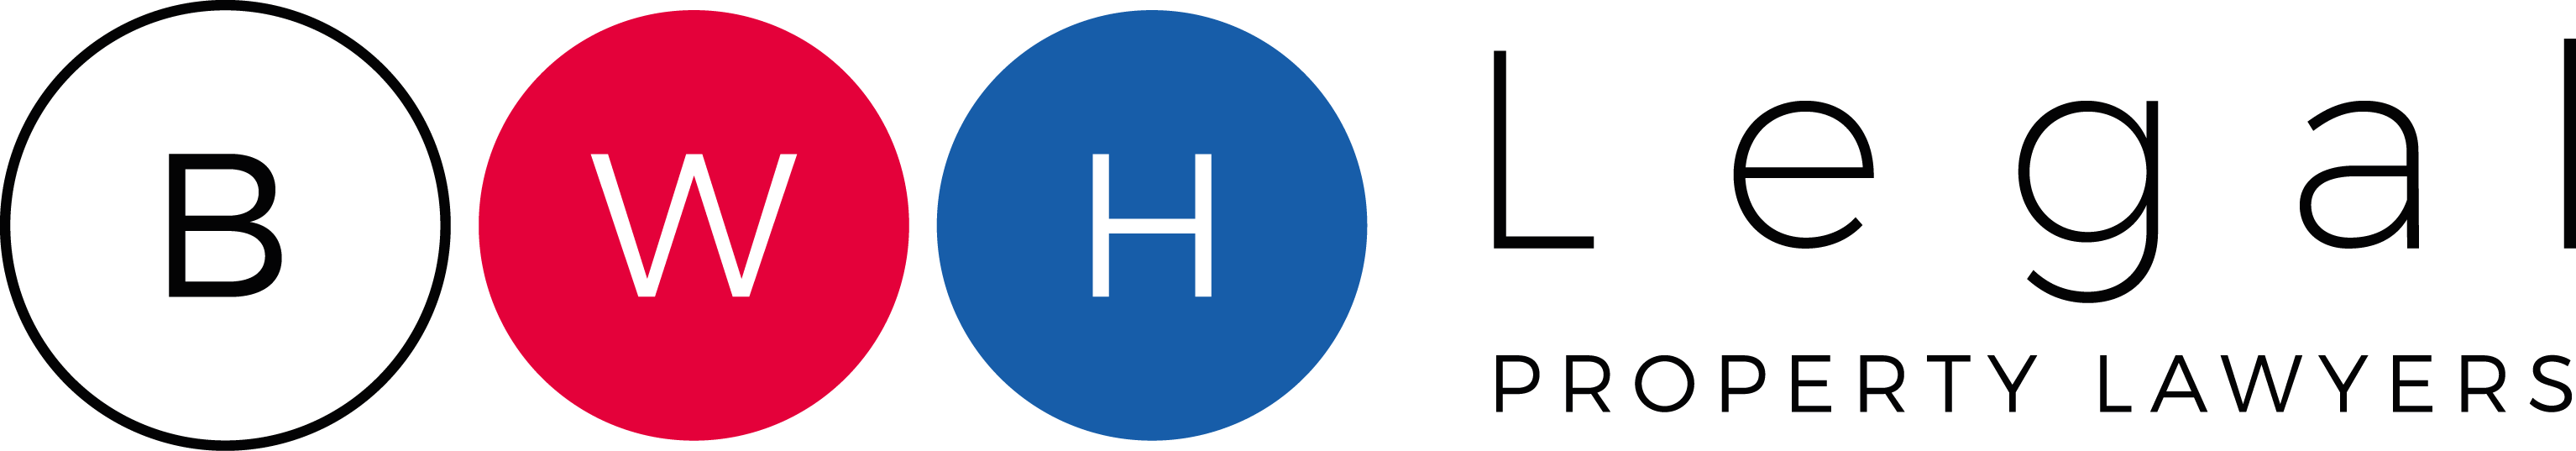 BWH Legal Logo